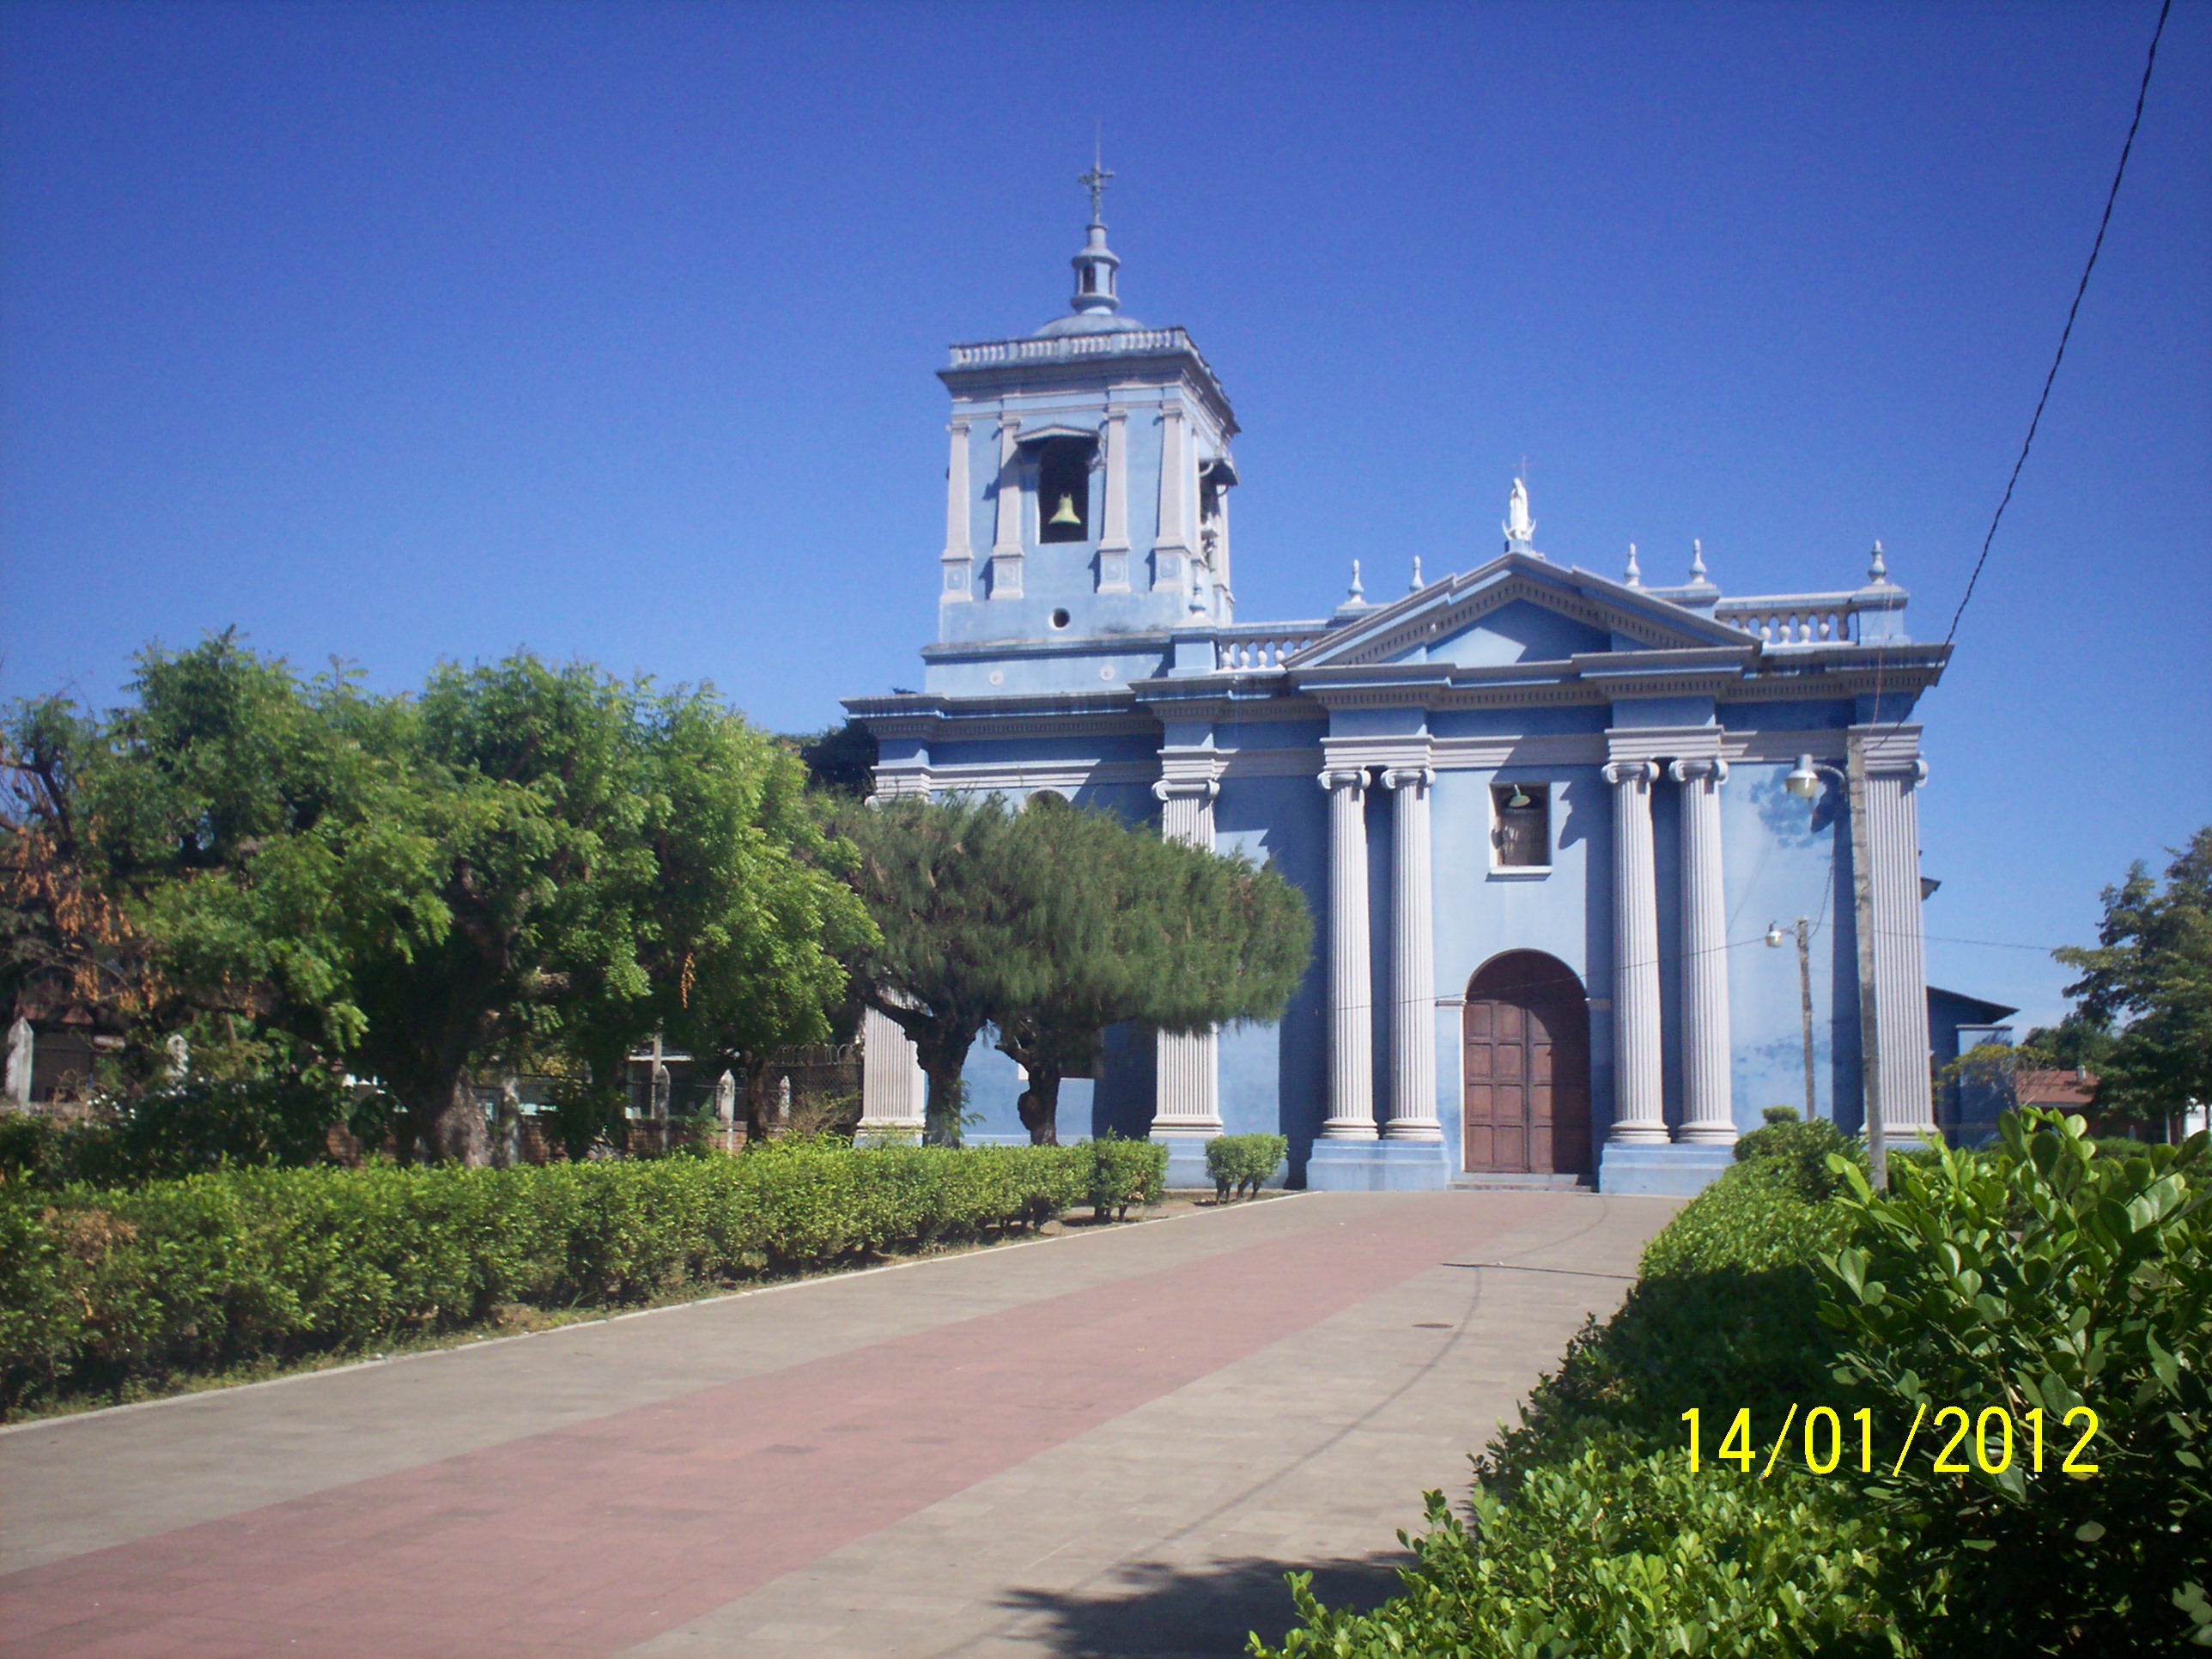 Foto: Parroquia De Guadalupe, Chinandega - Chinandega, Nicaragua